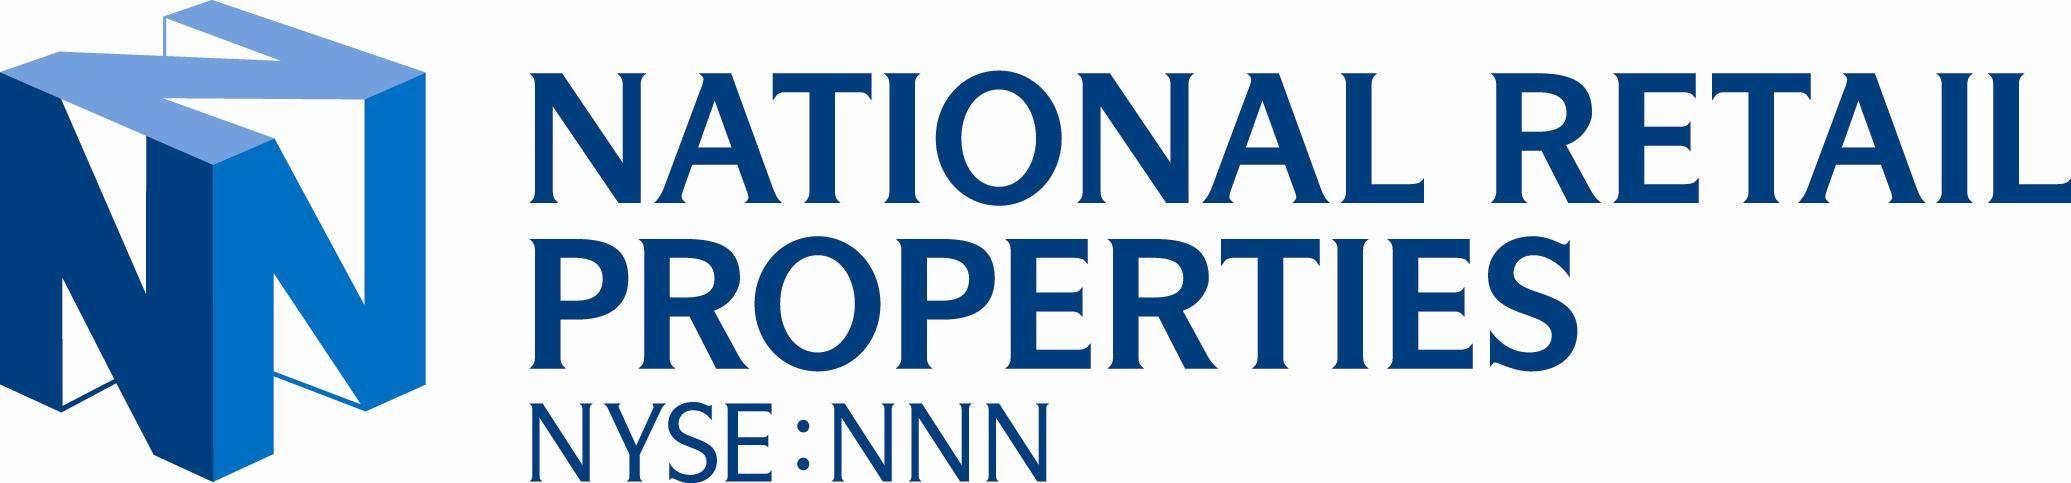 Nnn Logo - National Retail Properties, Inc. NNN Company